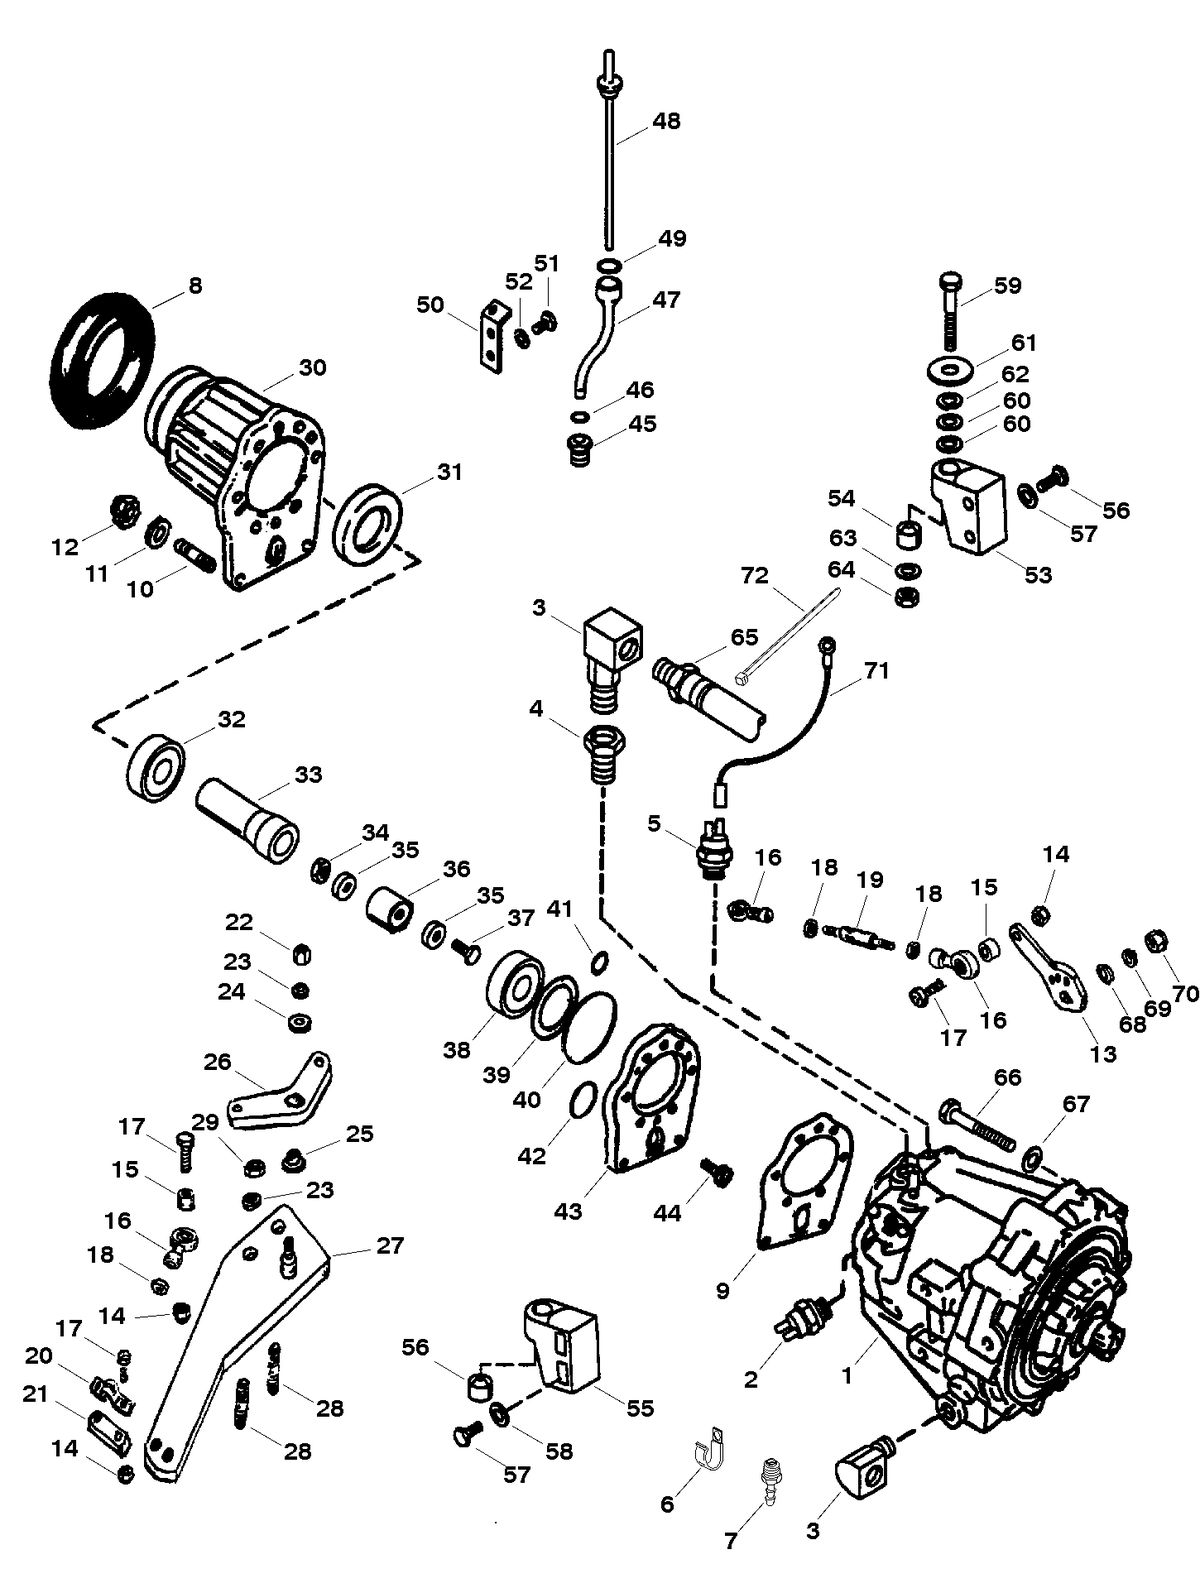 MERCRUISER 800 SC ENGINE TRANSMSISSION AND COMPONENTS - VI DRIVE (BRAVO) (PG 1 0F 2)